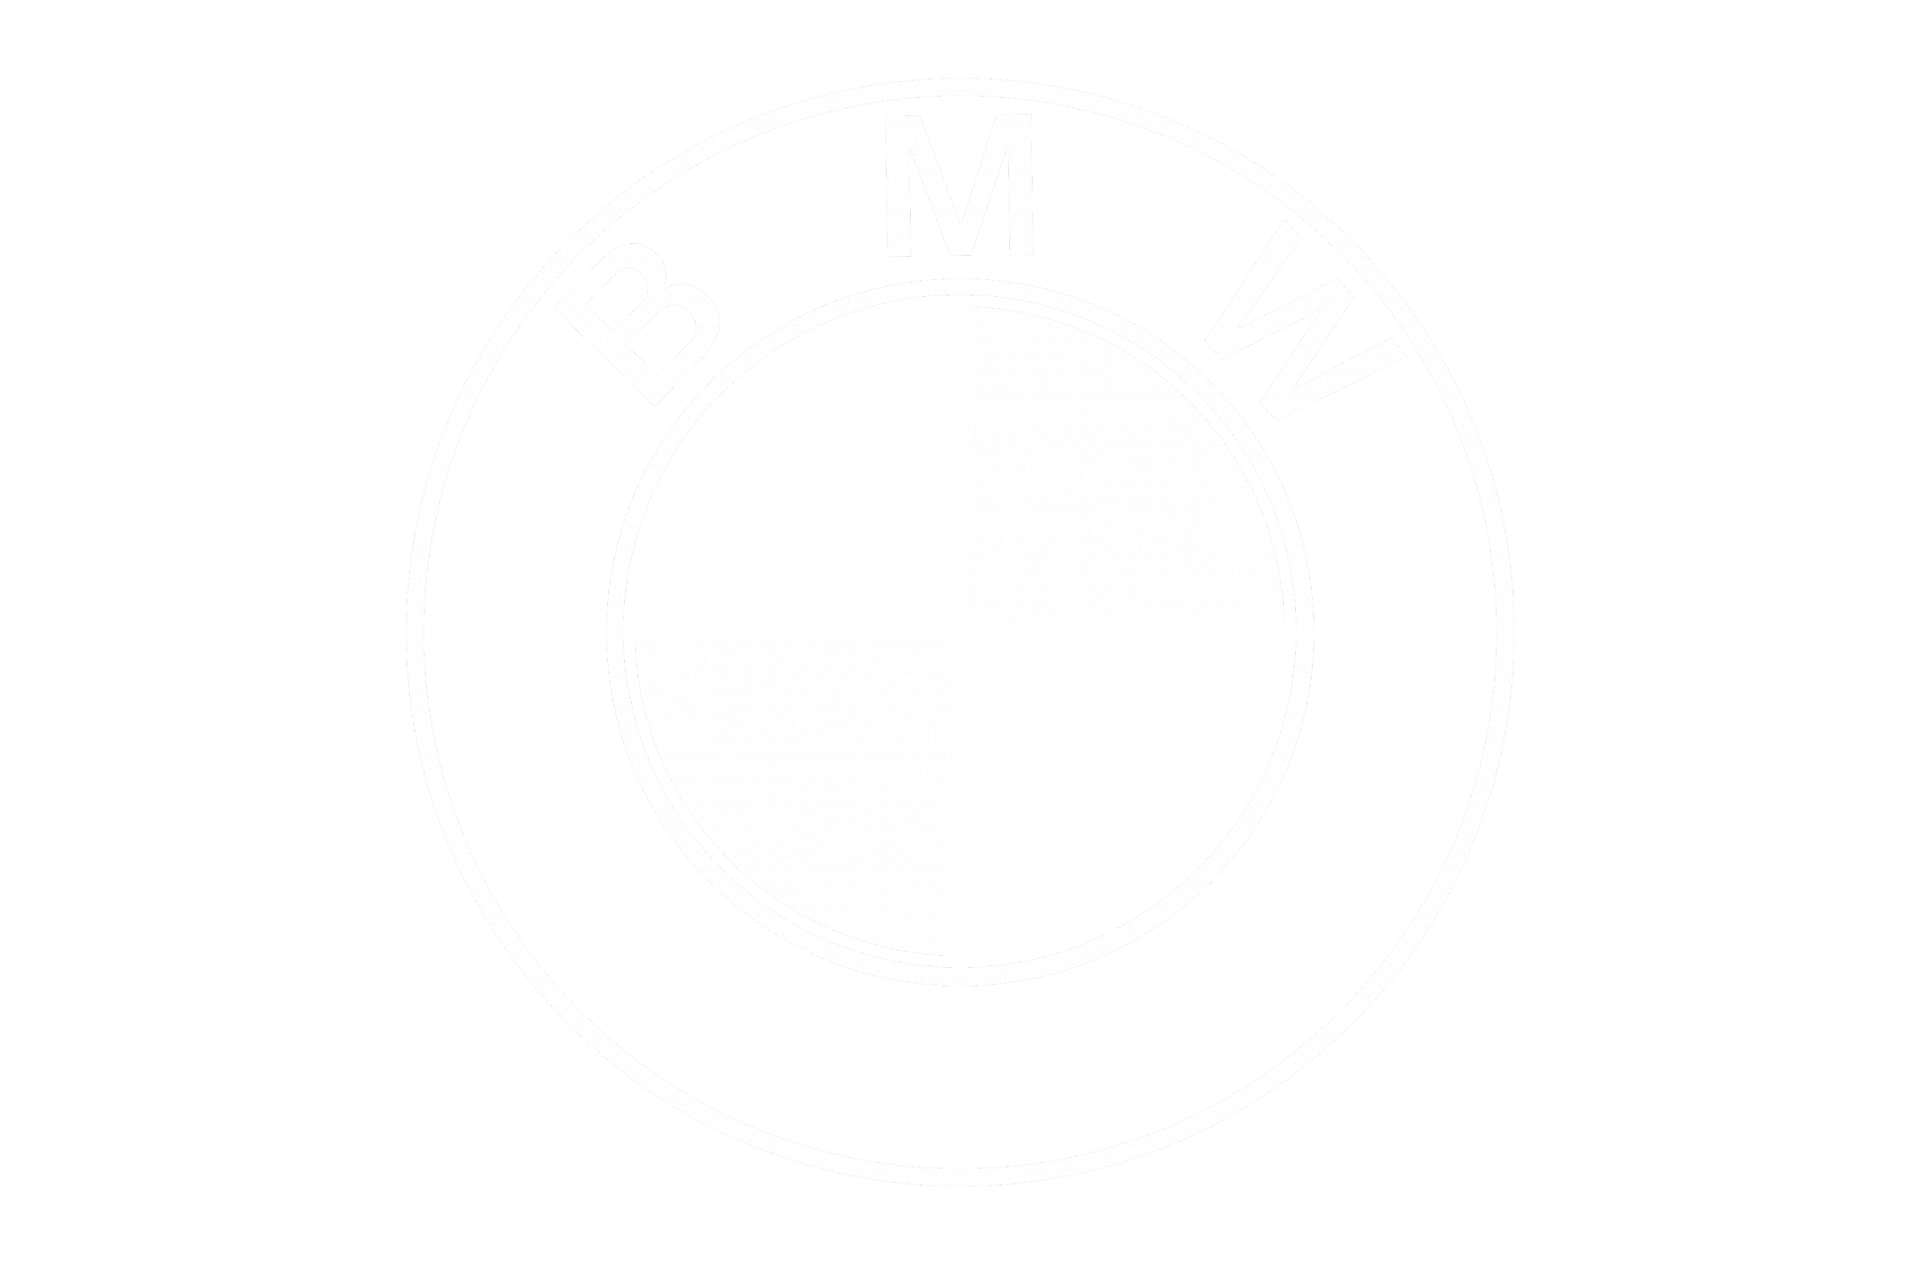 toppng.com-bmw-logo-black-and-white-1903x1903